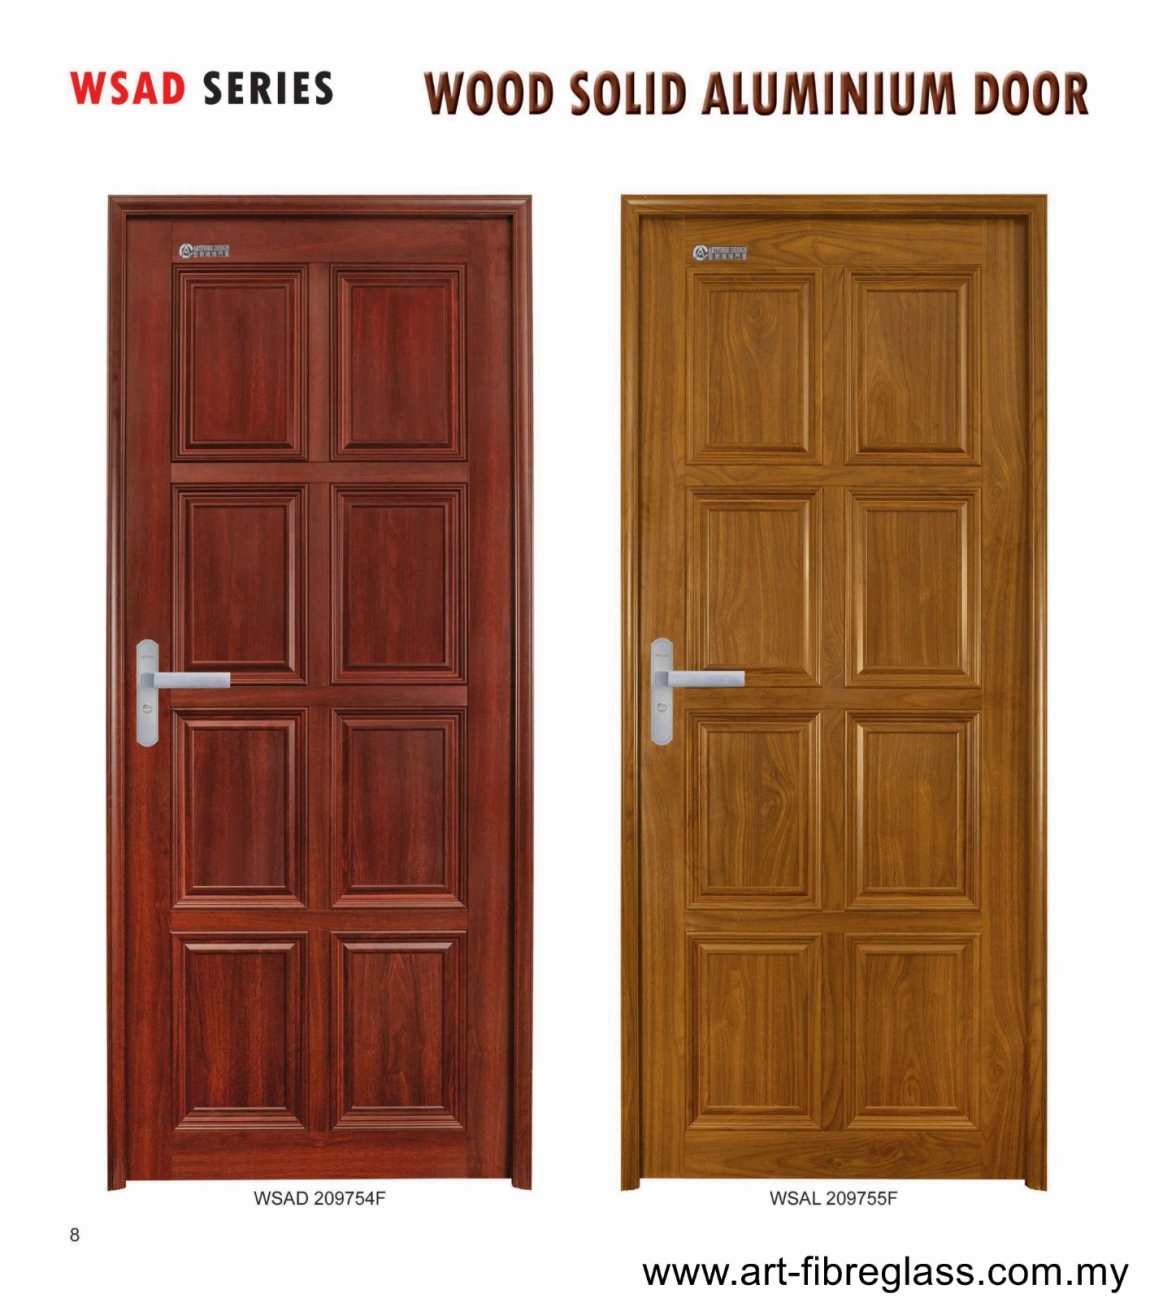 Aluminium Door Catalog - 08 Art Fibreglass Aluminium Door  Aluminum Door Catalog Catalog & Brochure